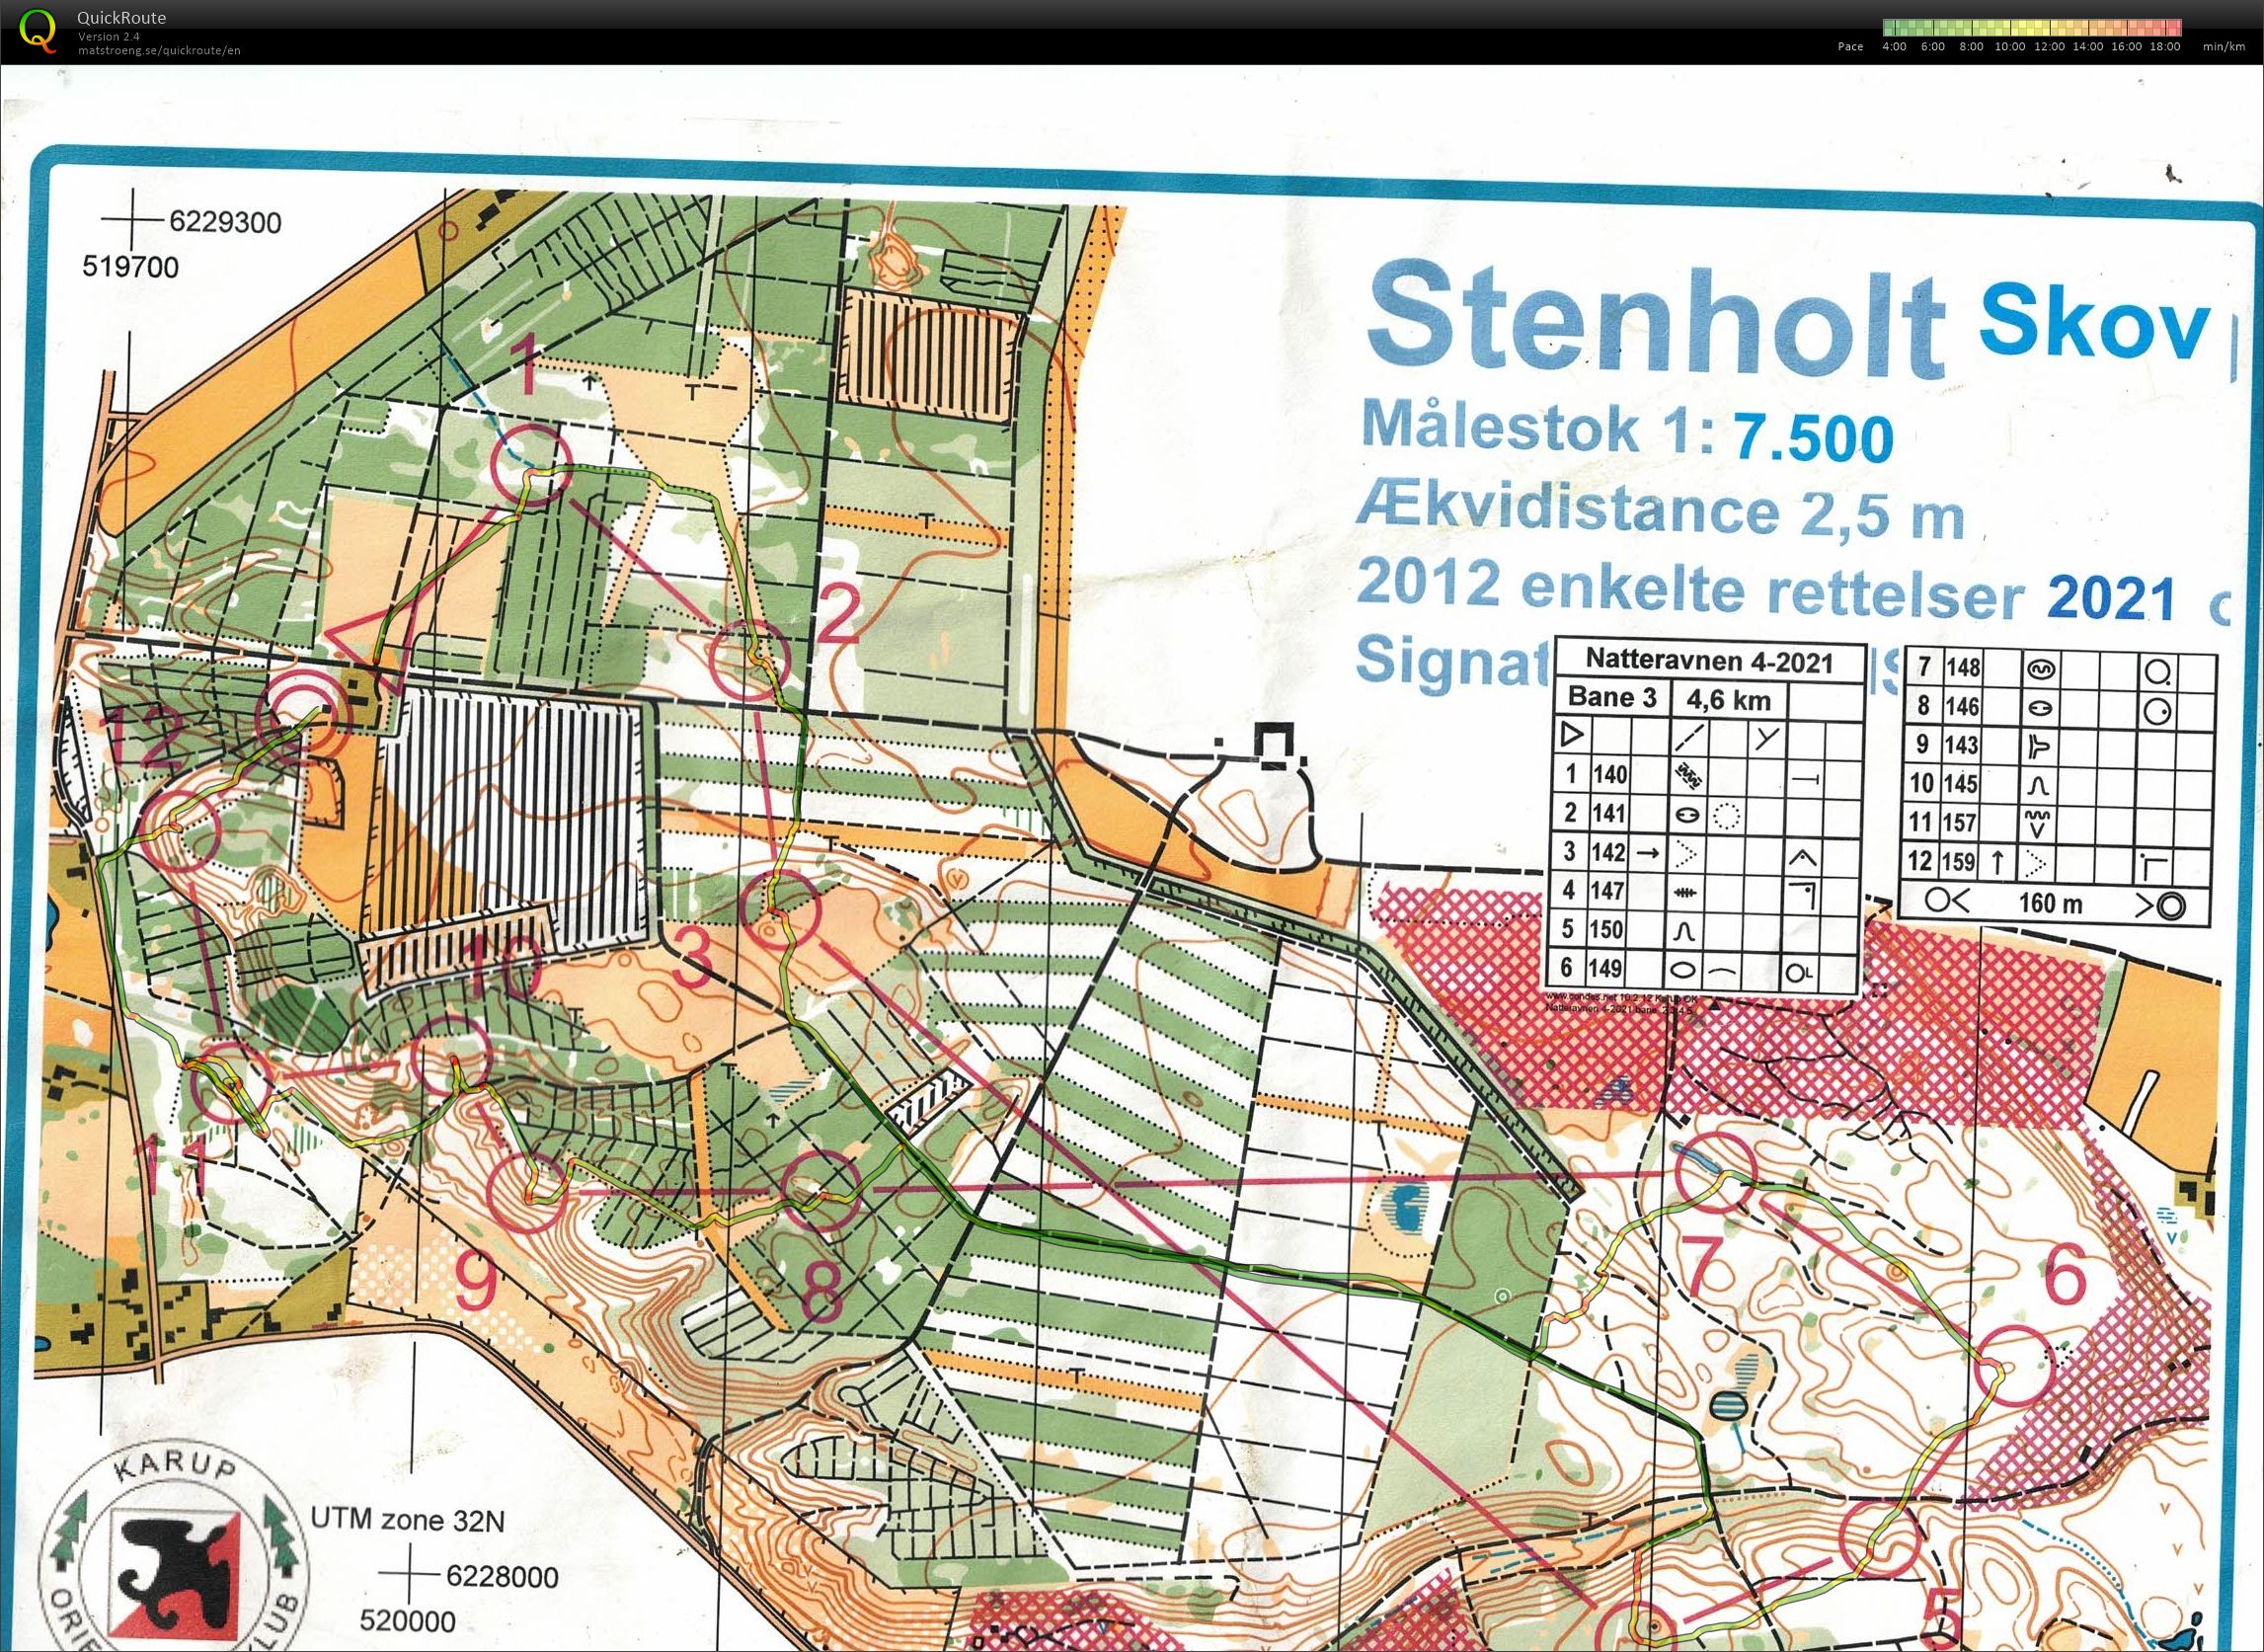 Stenholt, Natteravn 4, bane 3 (2021-11-10)